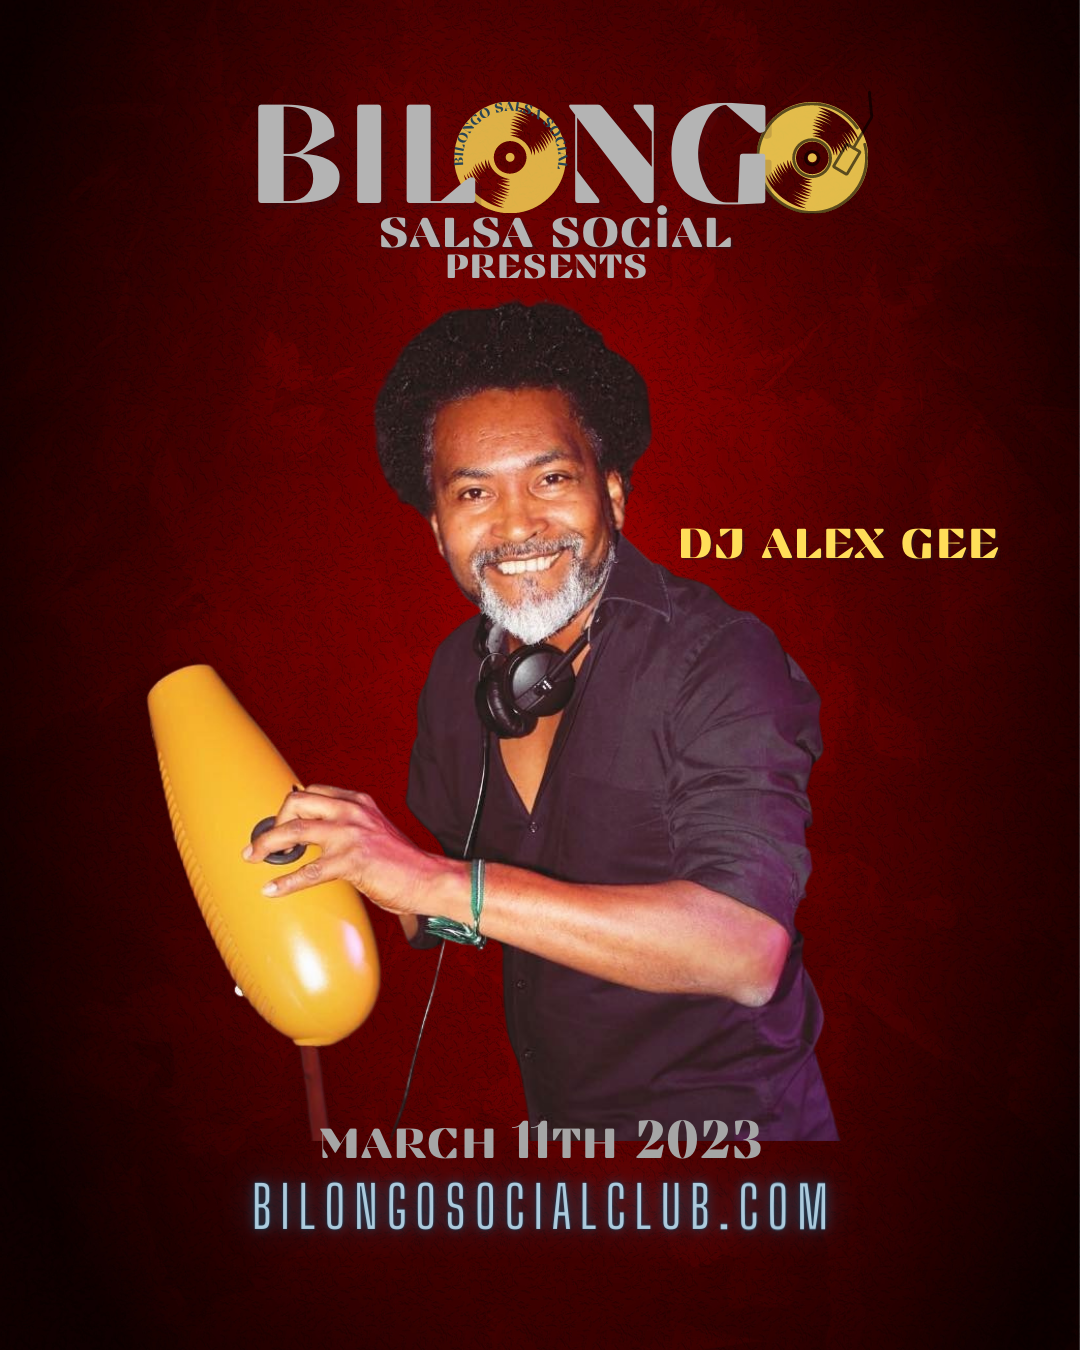 Bilongo Salsa Social On vinyl - March 11th